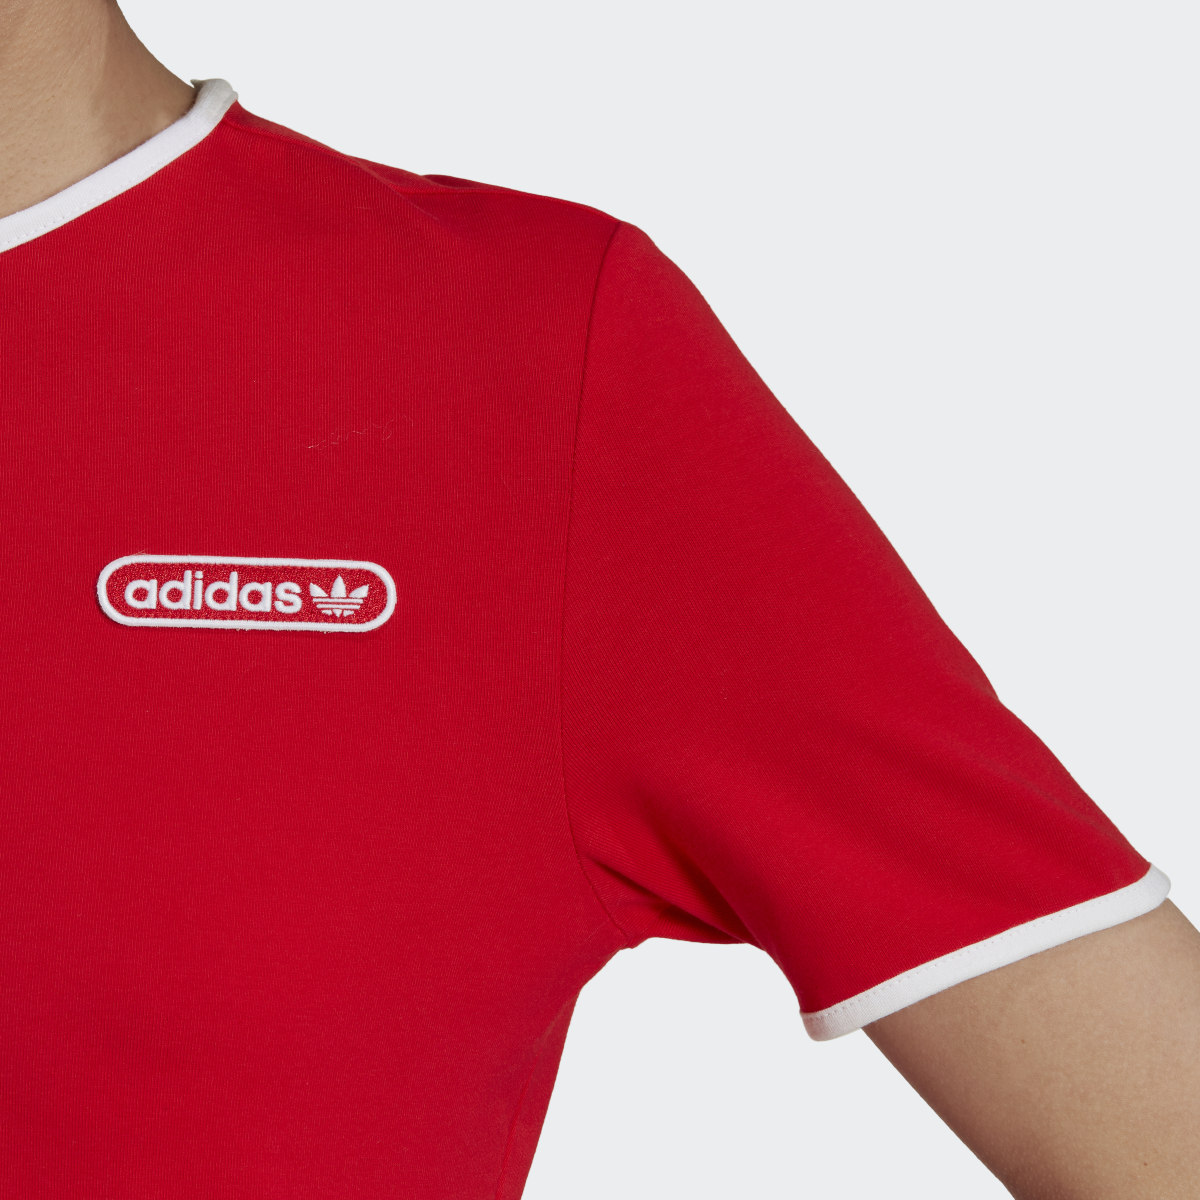 Adidas T-shirt Crop with Binding Details. 7